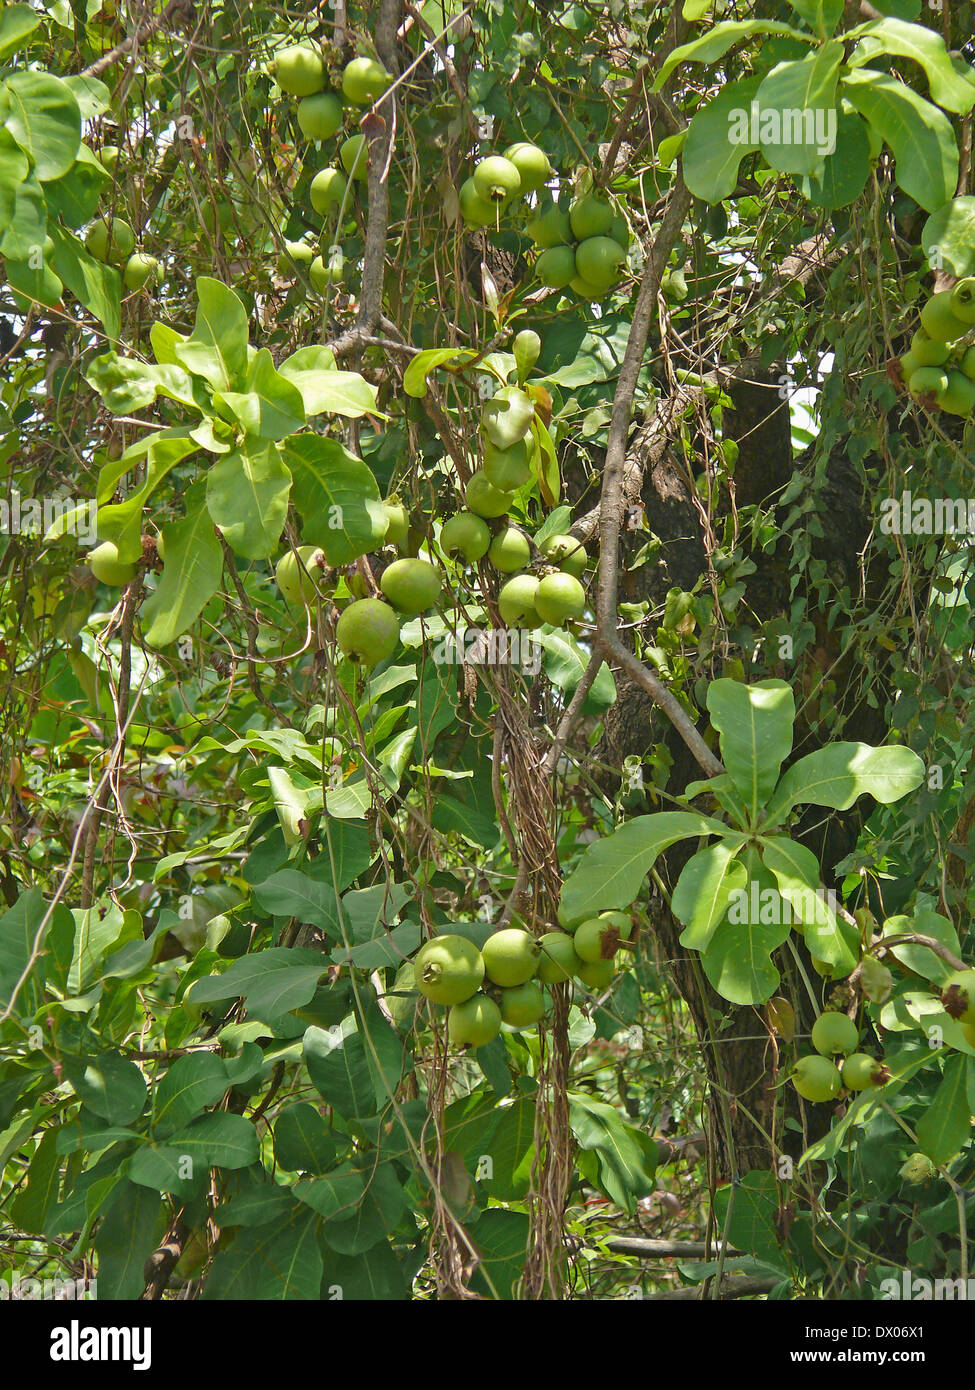 Plant & Fruits of Careya arborea Roxb, Careya arborea Stock Photo